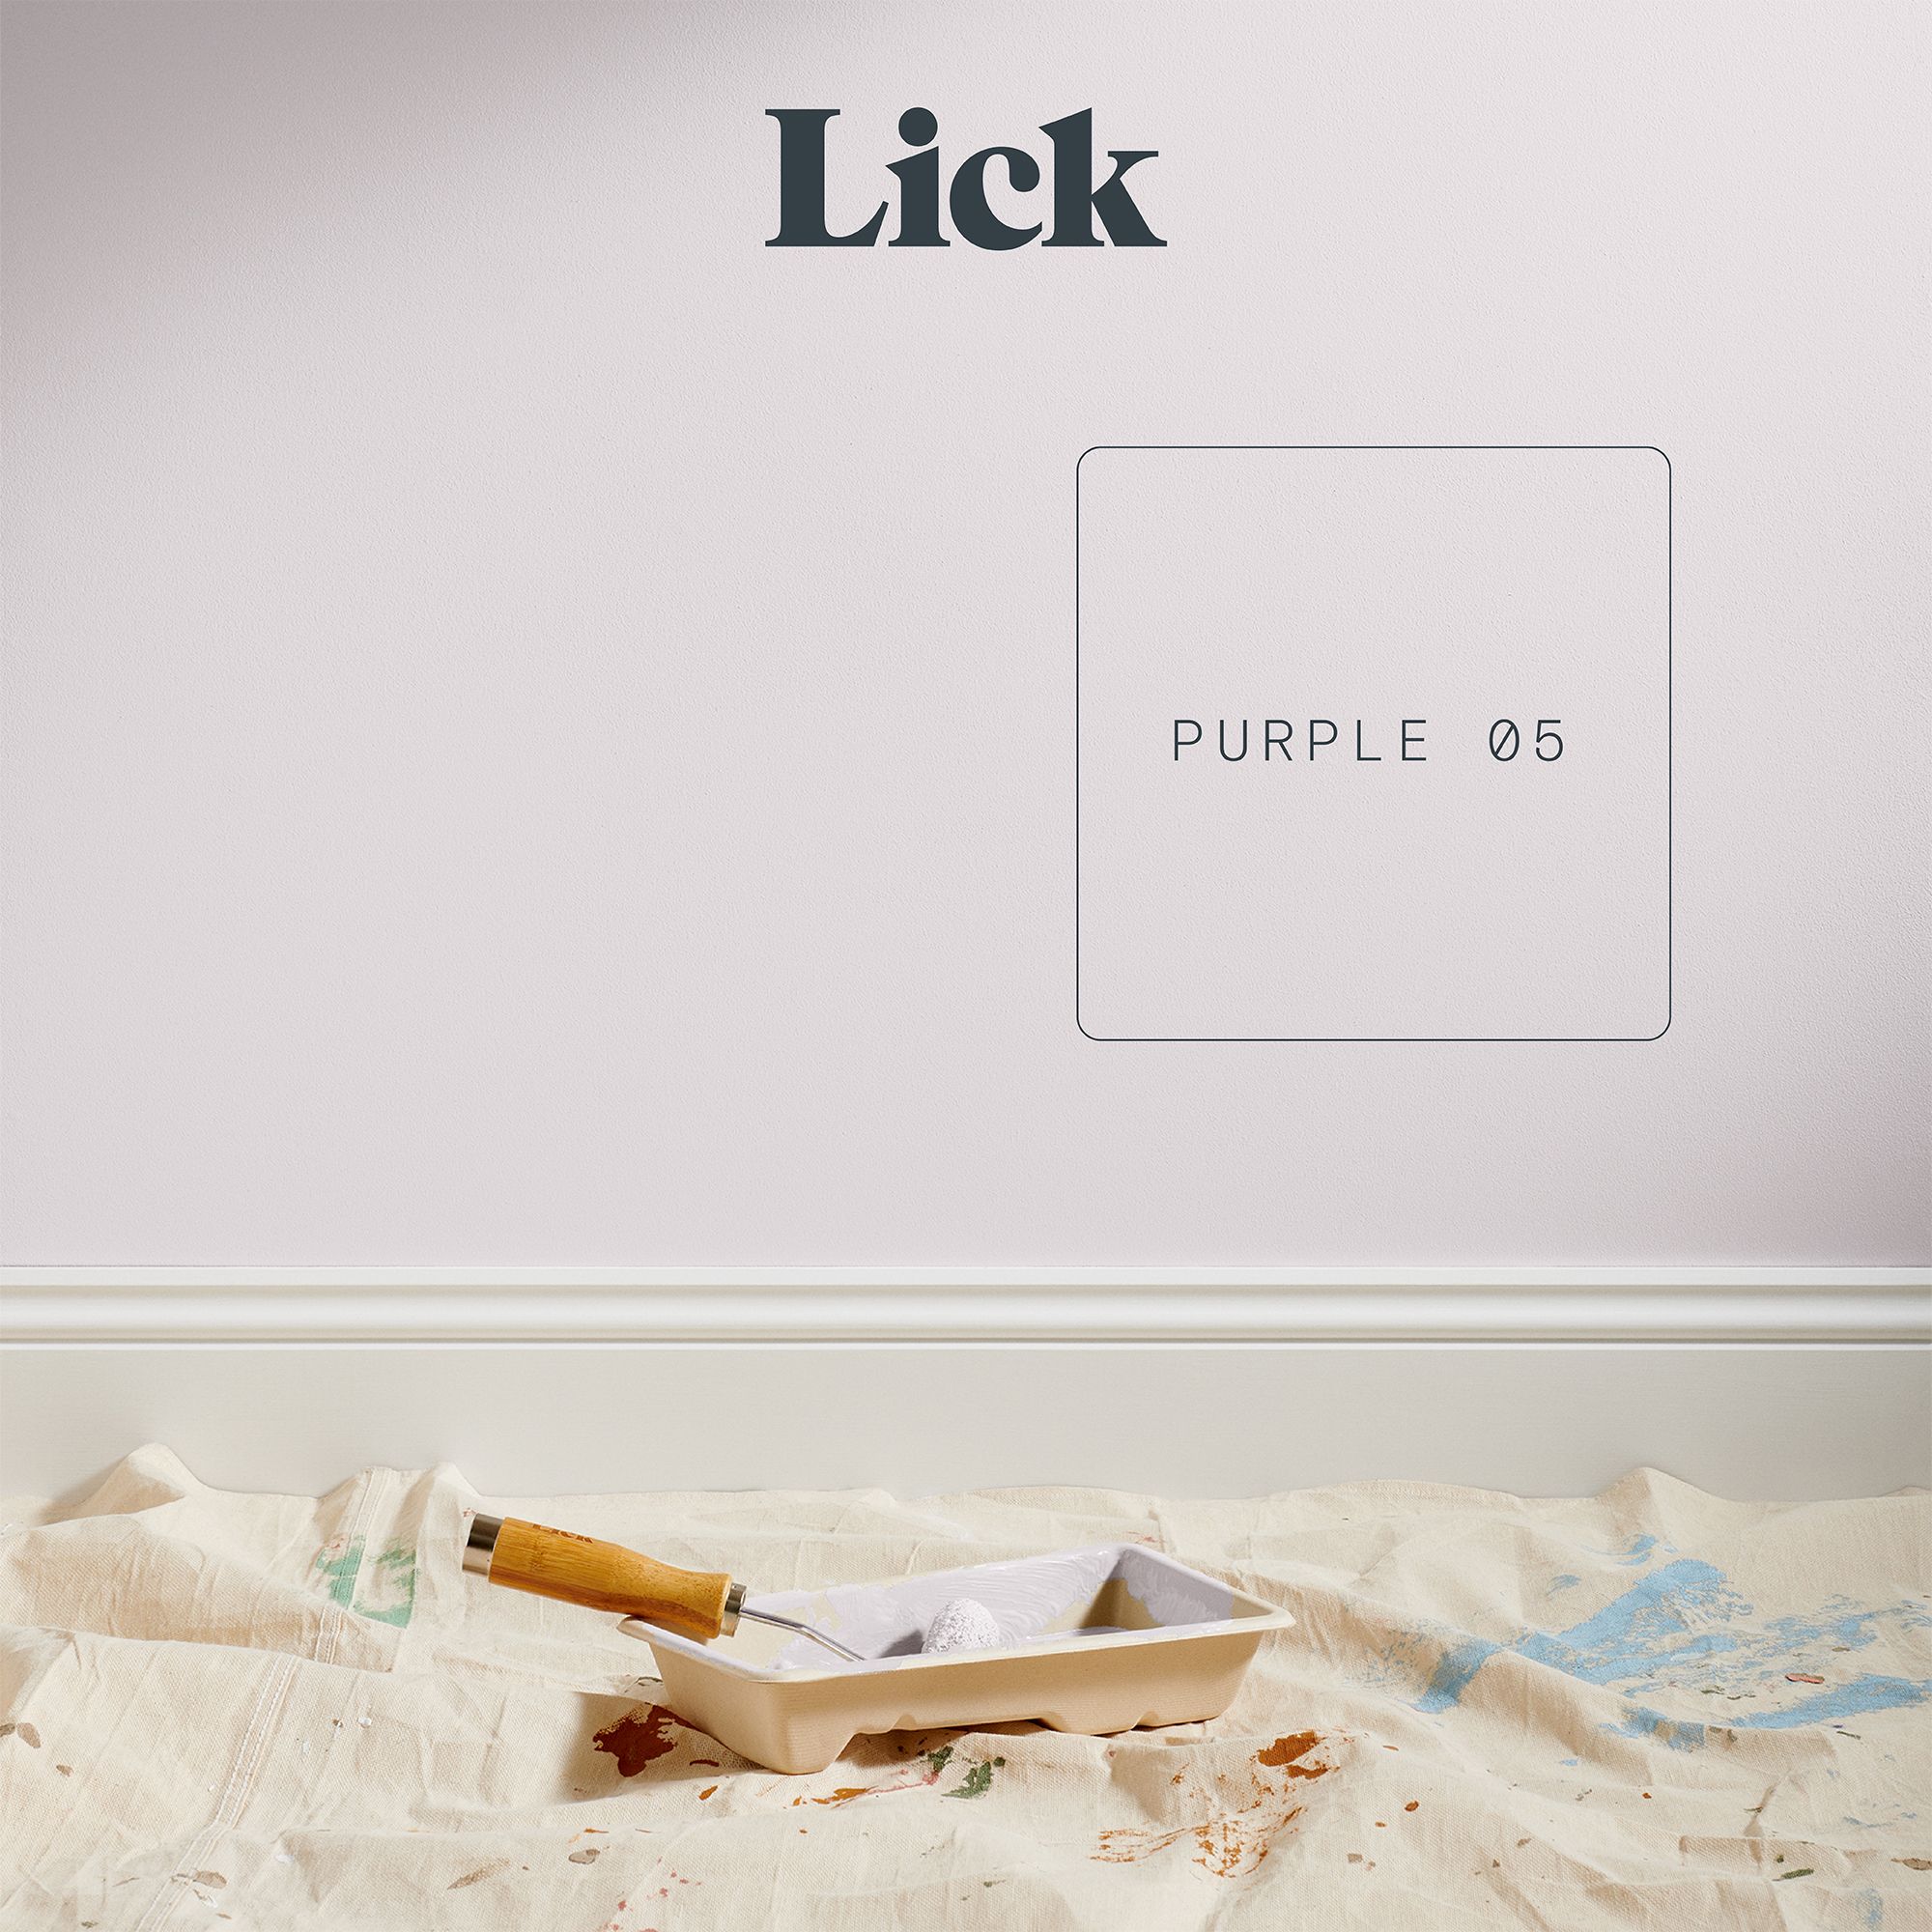 Lick Purple 05 Matt Emulsion paint, 2.5L